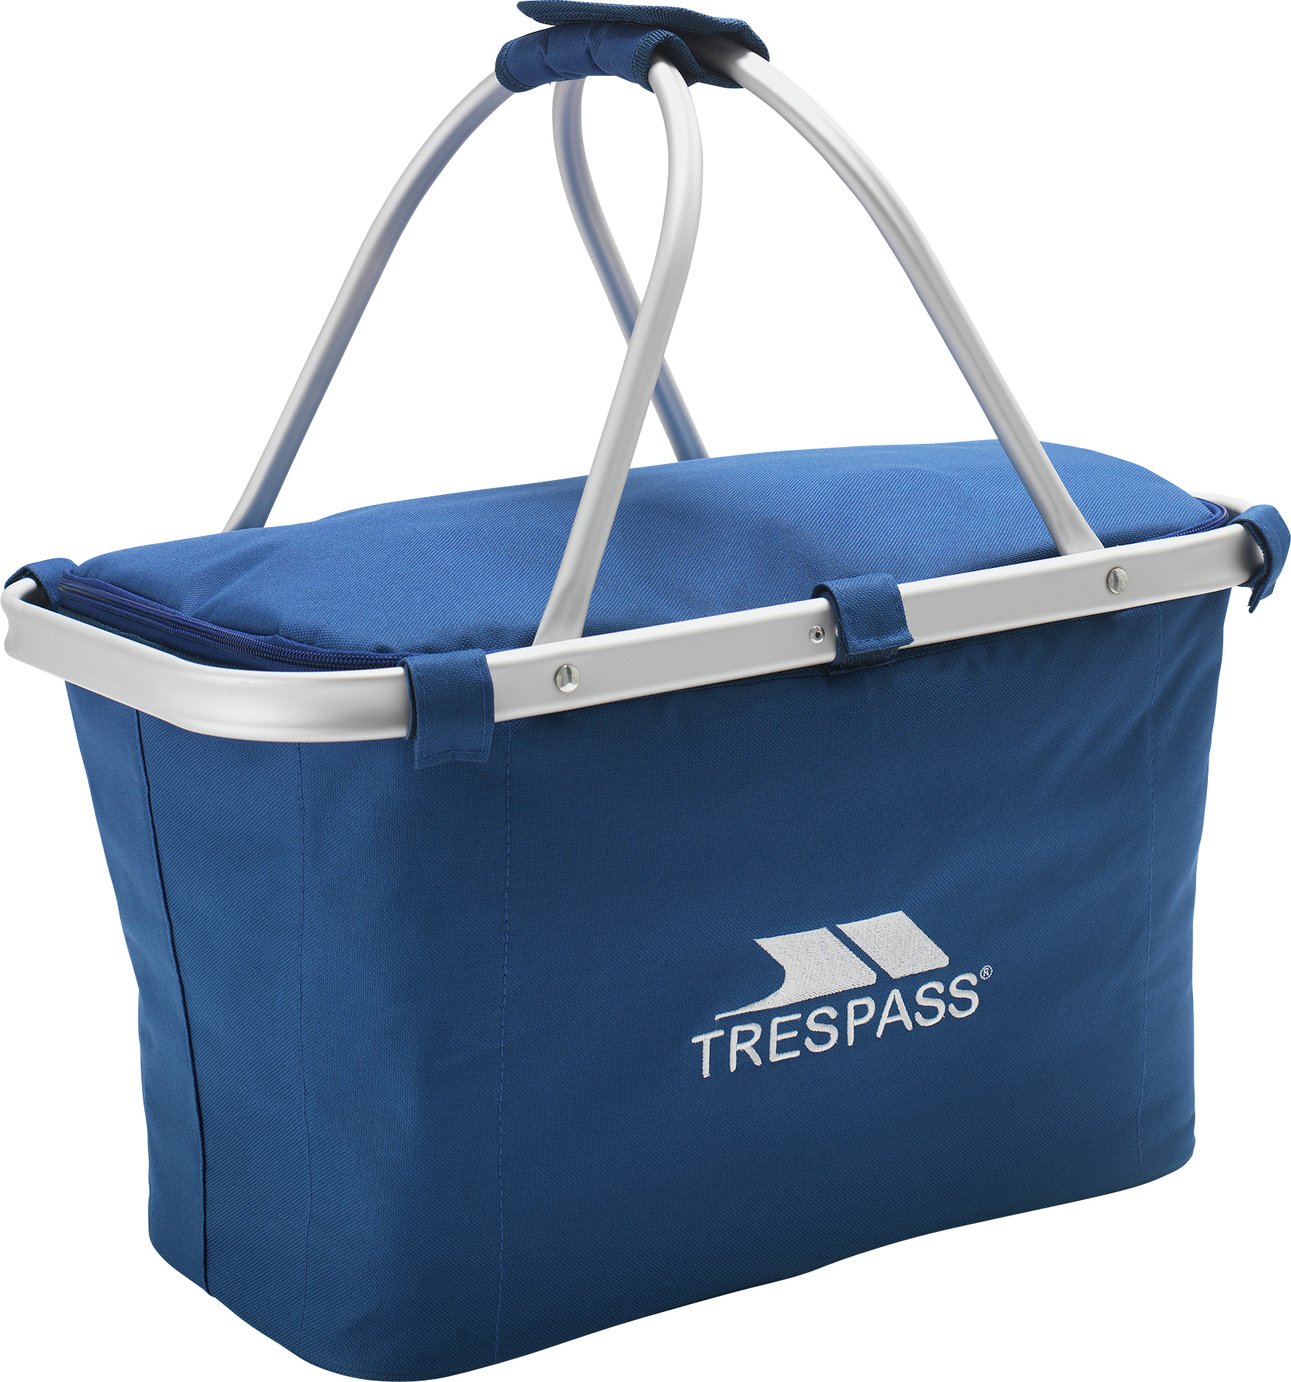 Trespass Basket Style Cool Bag - 17.5L